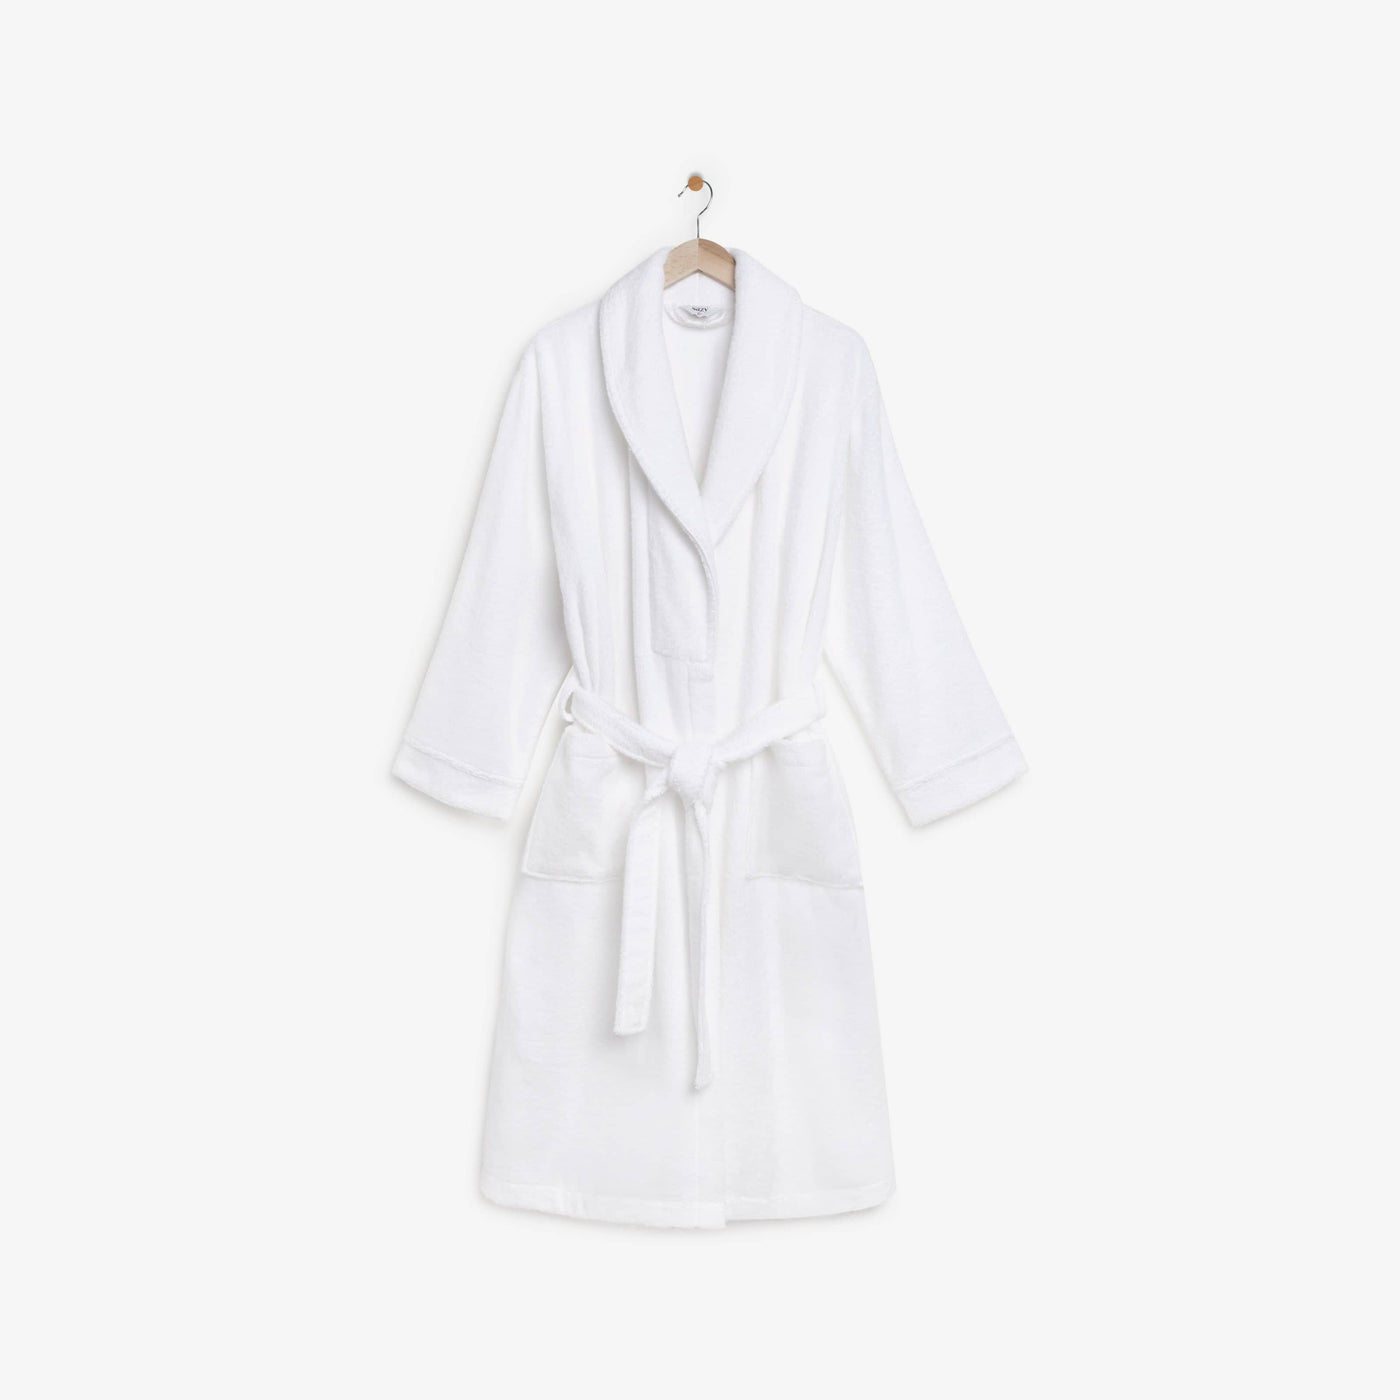 Rupert Aqua Fibro Extra Soft 100% Turkish Cotton Men's Dressing Gown, White, XL 1